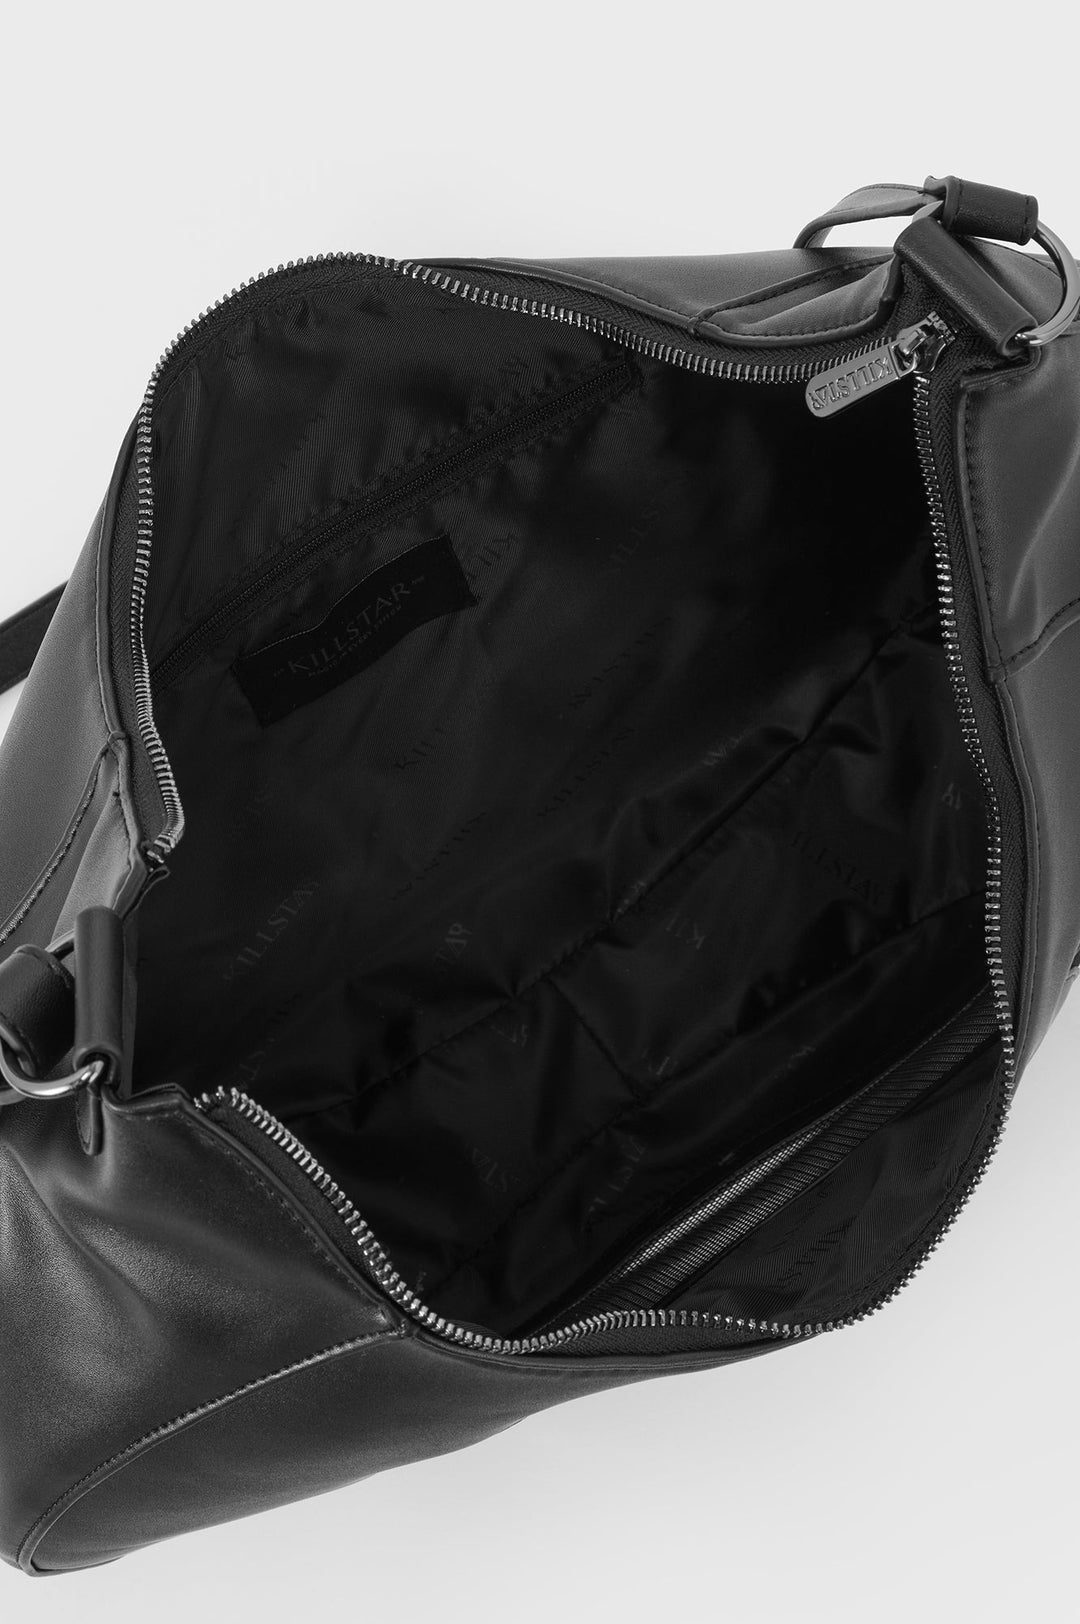 occult black handbag with zipper opening 